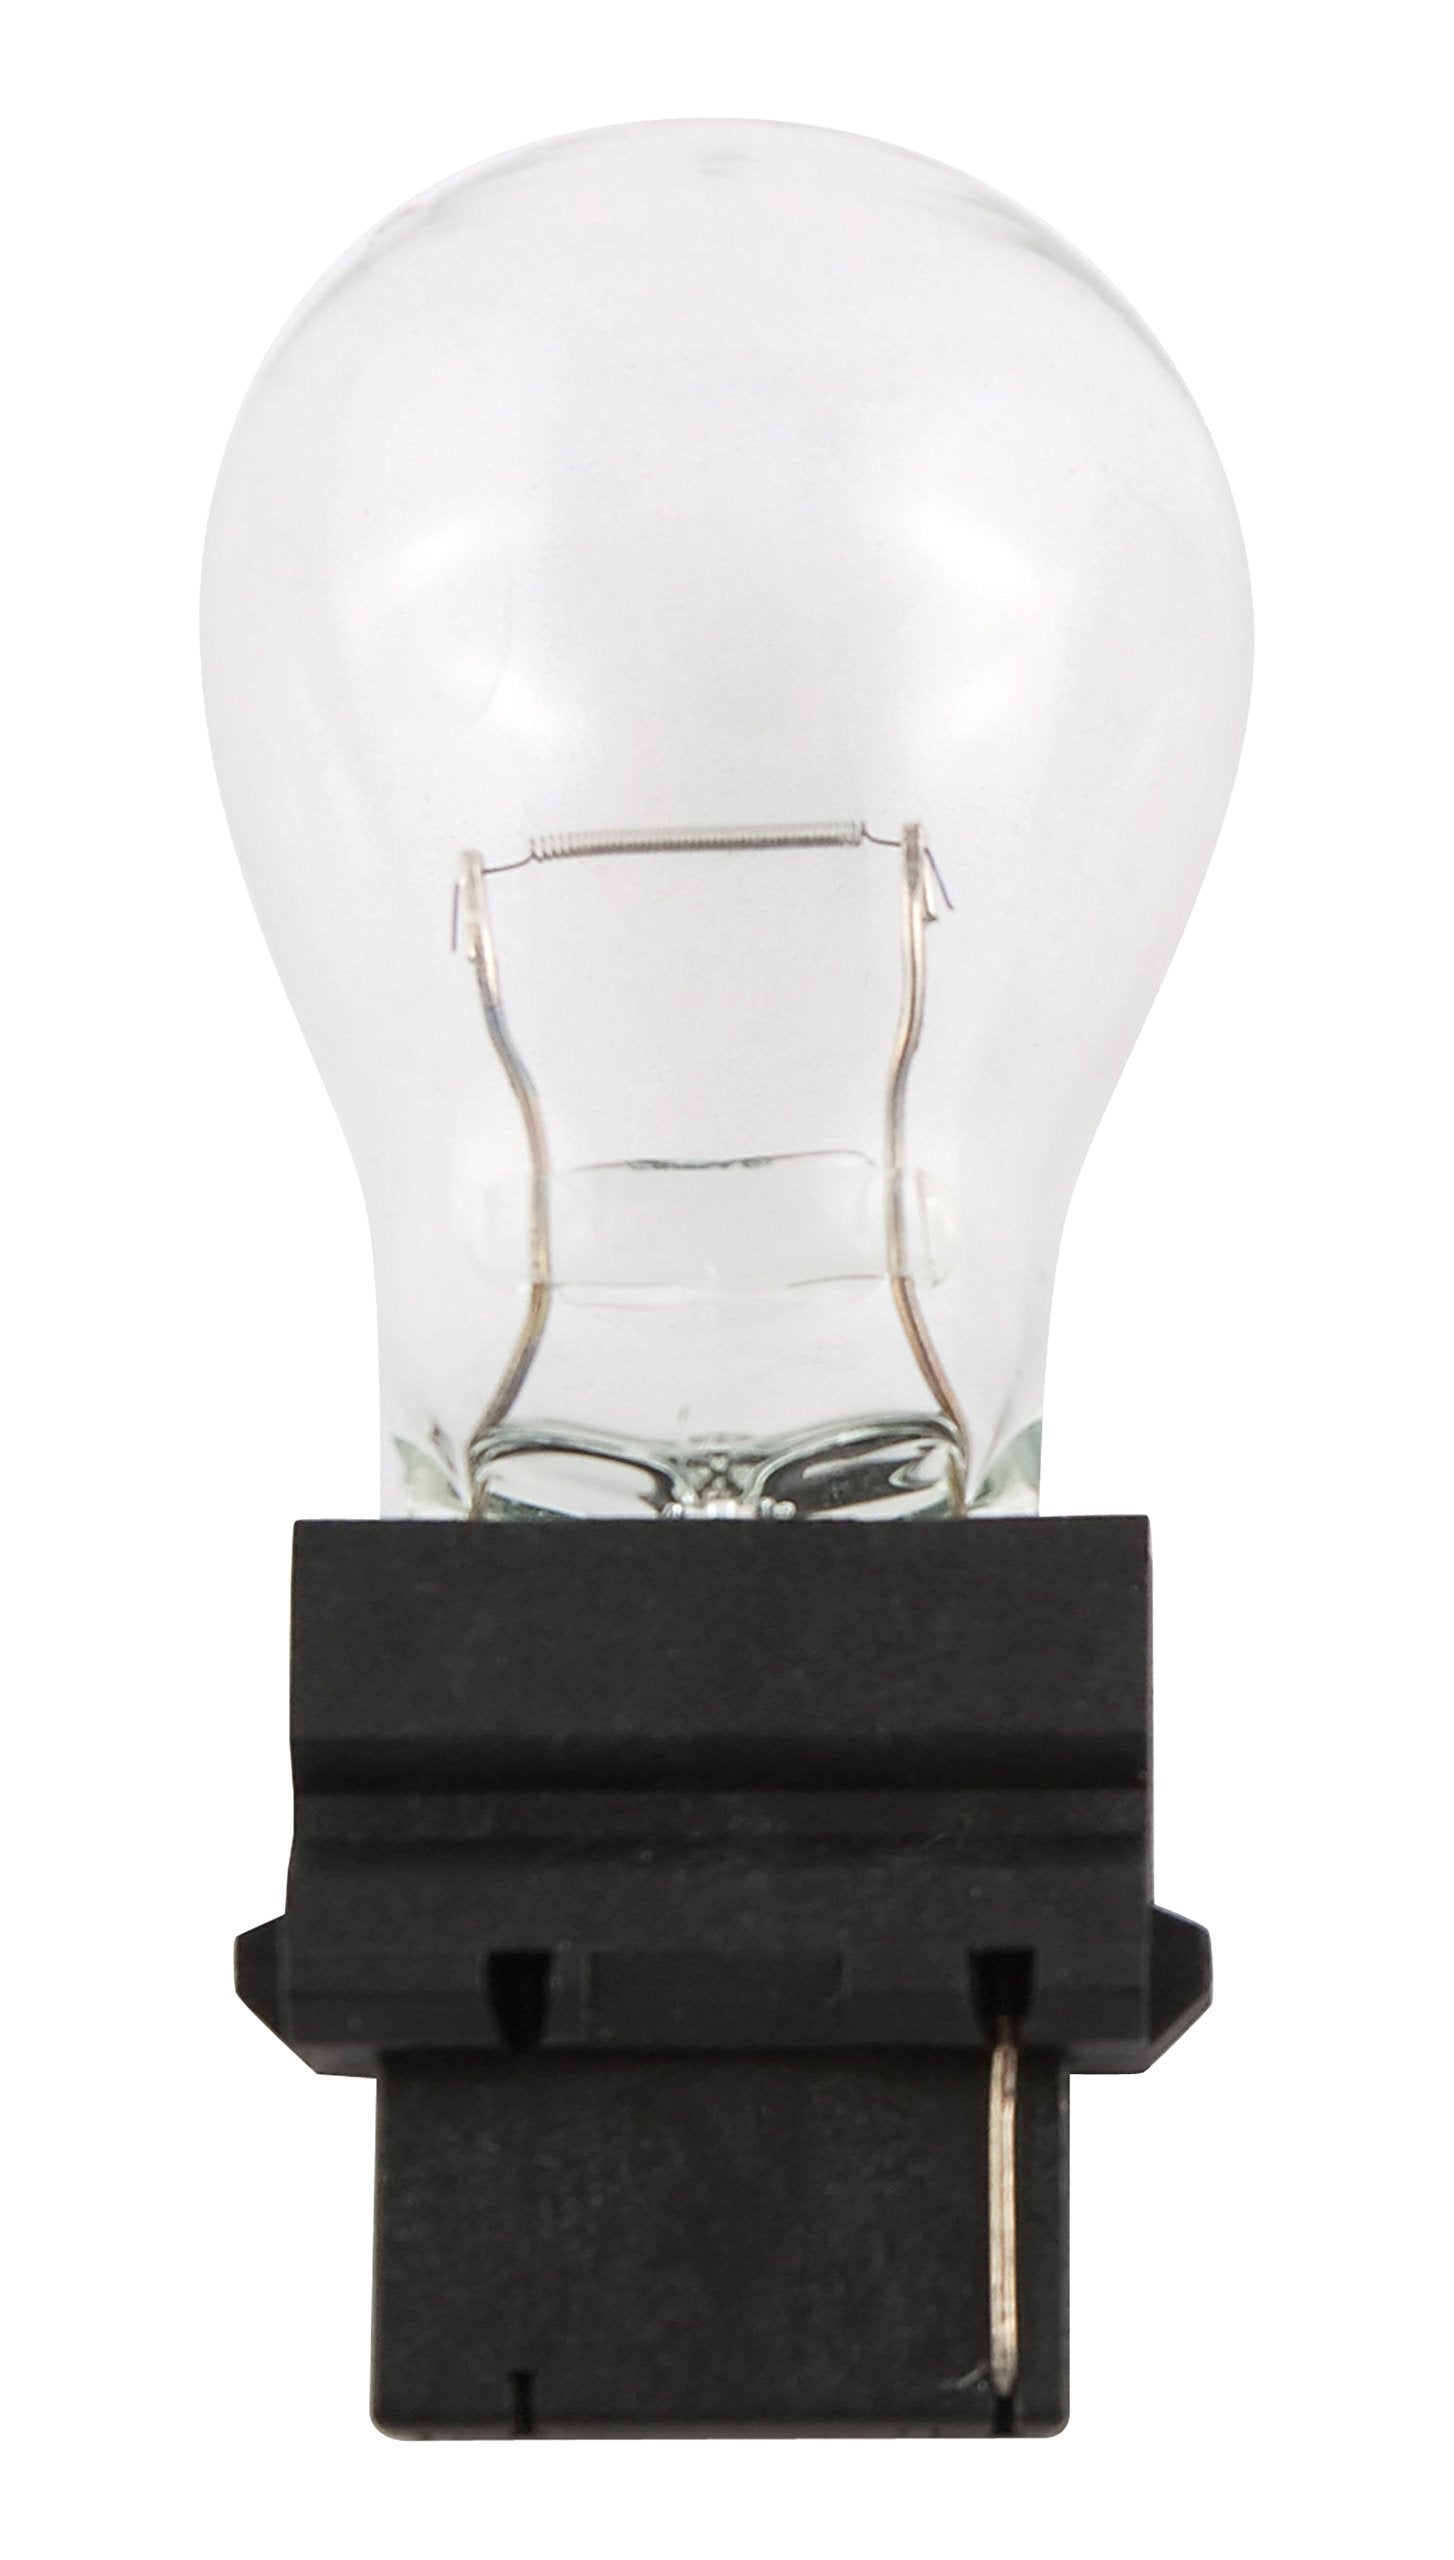 AP Products 016-02-3156 Bulb #3156